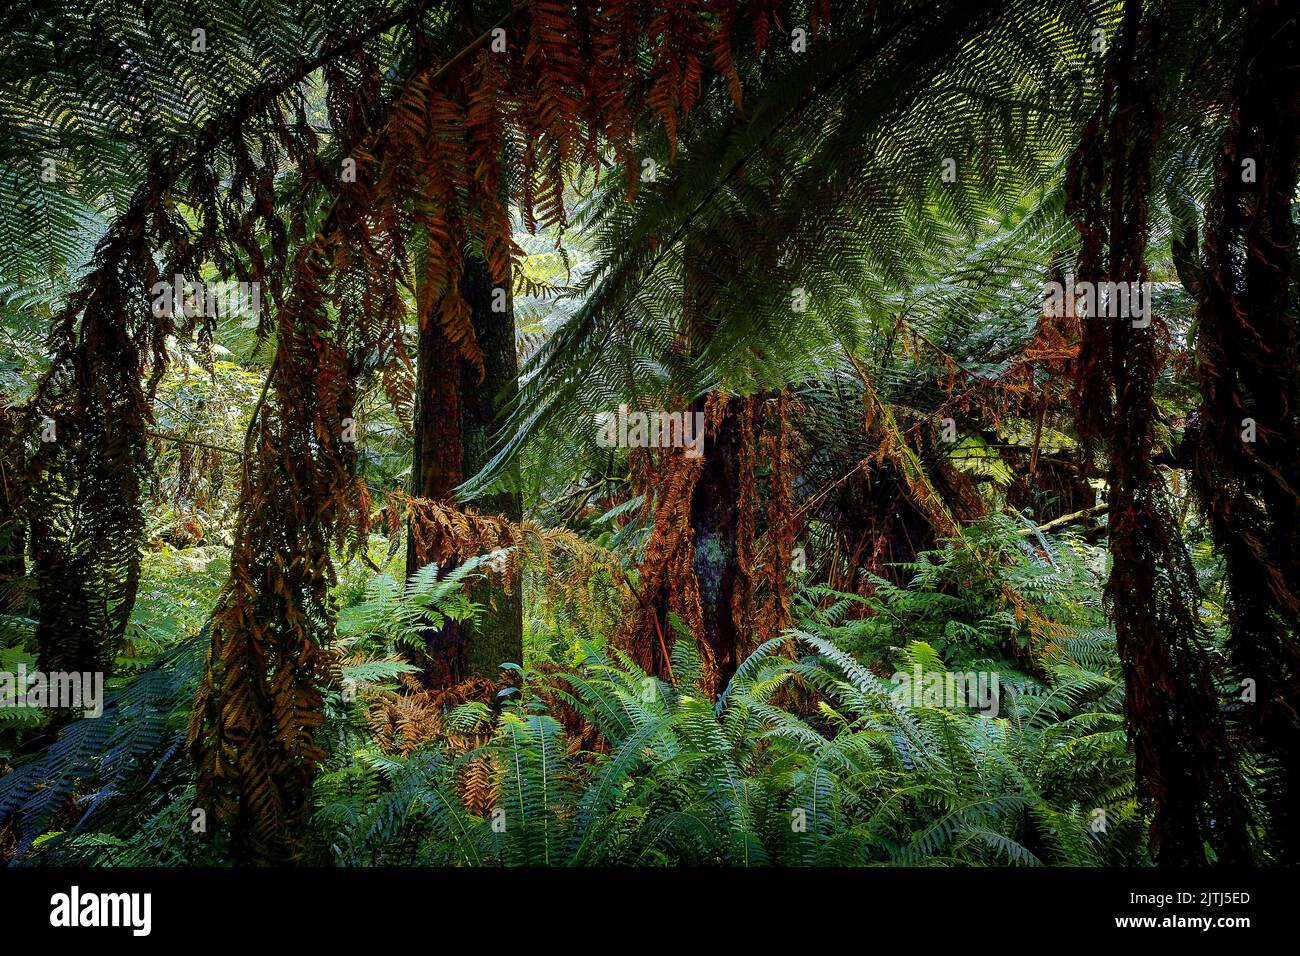 Ancient Tree Ferns Forest. Dandenong Ranges National Park, Victoria, Australia. Stock Photo